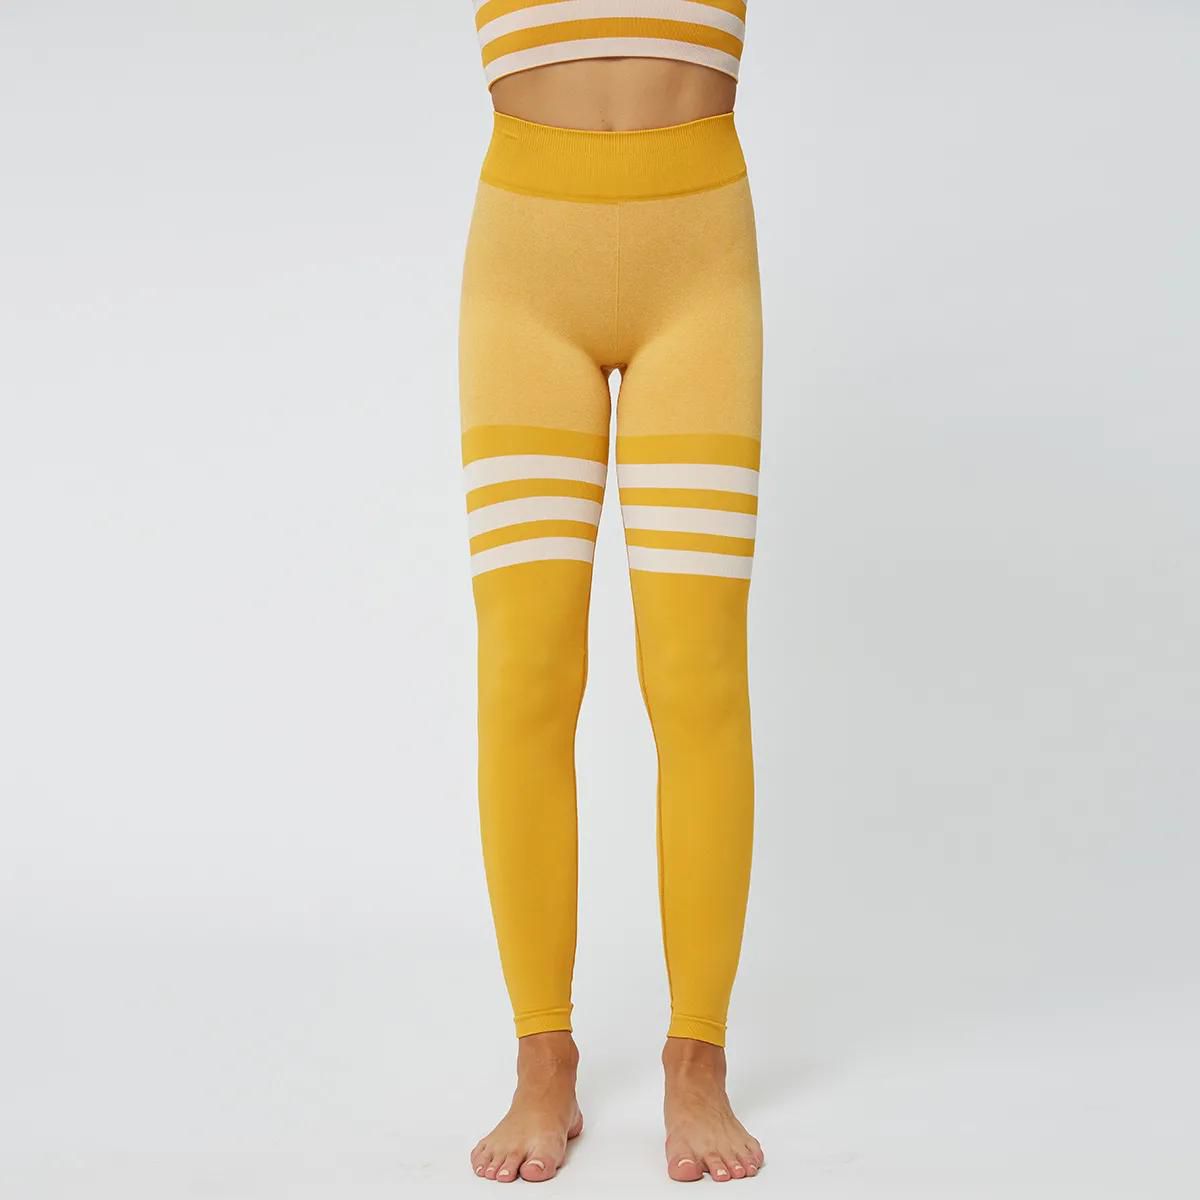 Yoga Pants Women's Seamless Quick-drying Yoga Clothes High Waist Tight Elastic Hip Lift Fitness Sports Leggings